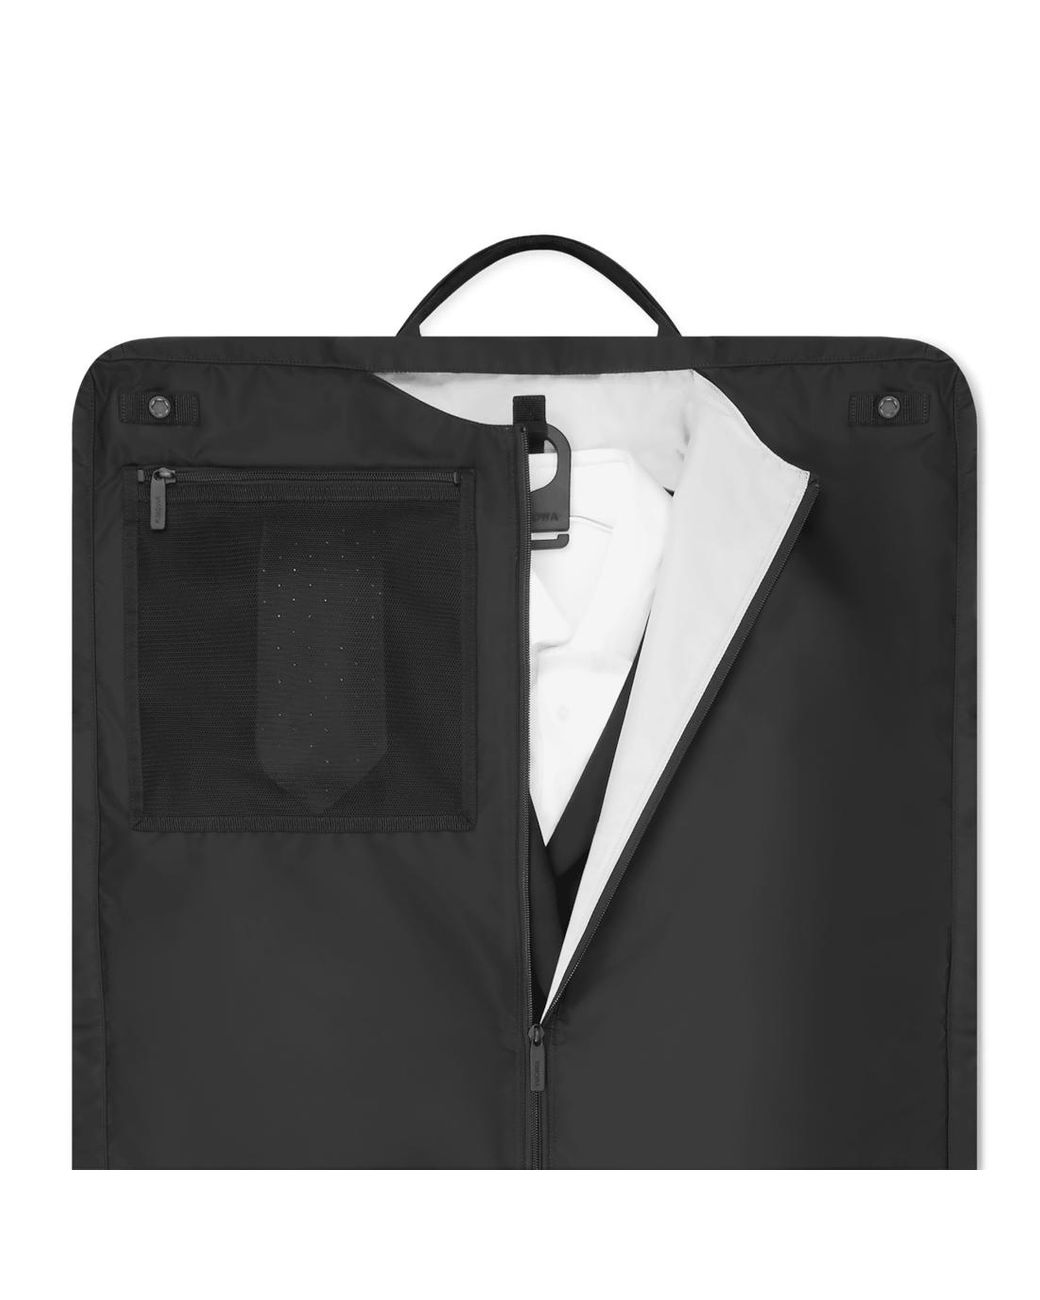 RIMOWA Travel Accessories Bifold Garment Bag Suitcase in Black for Men